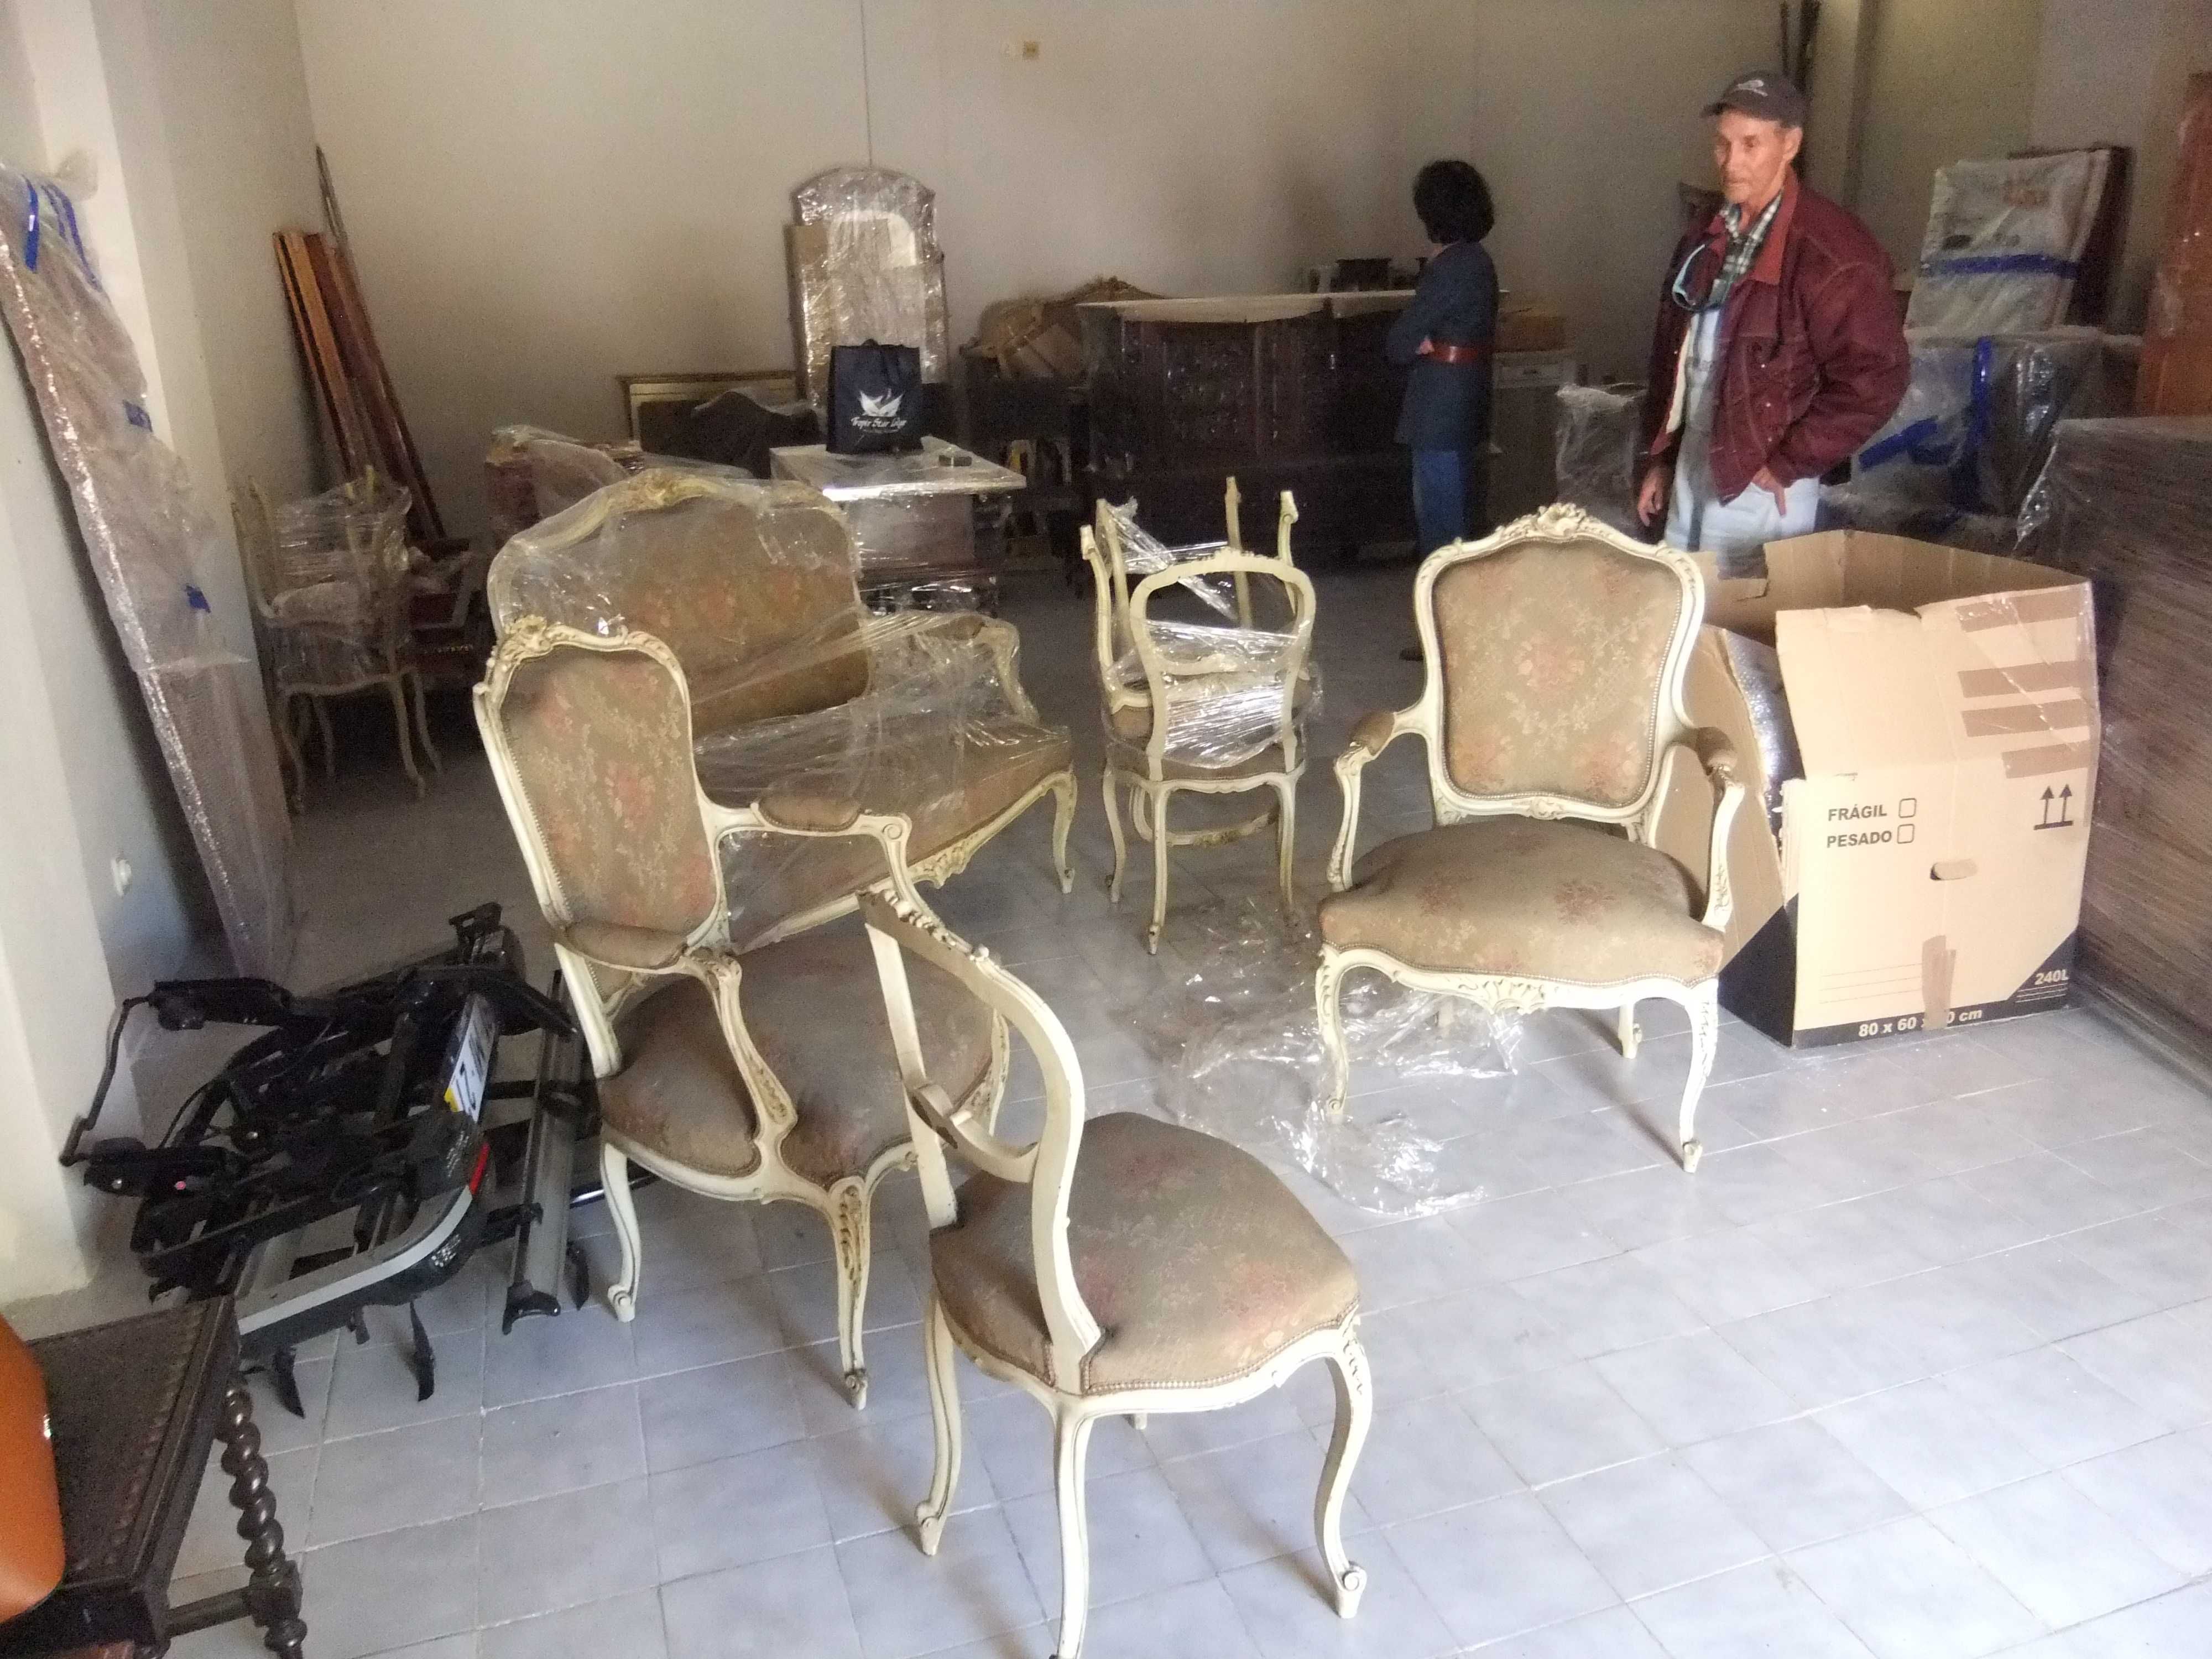 cadeiras antigas